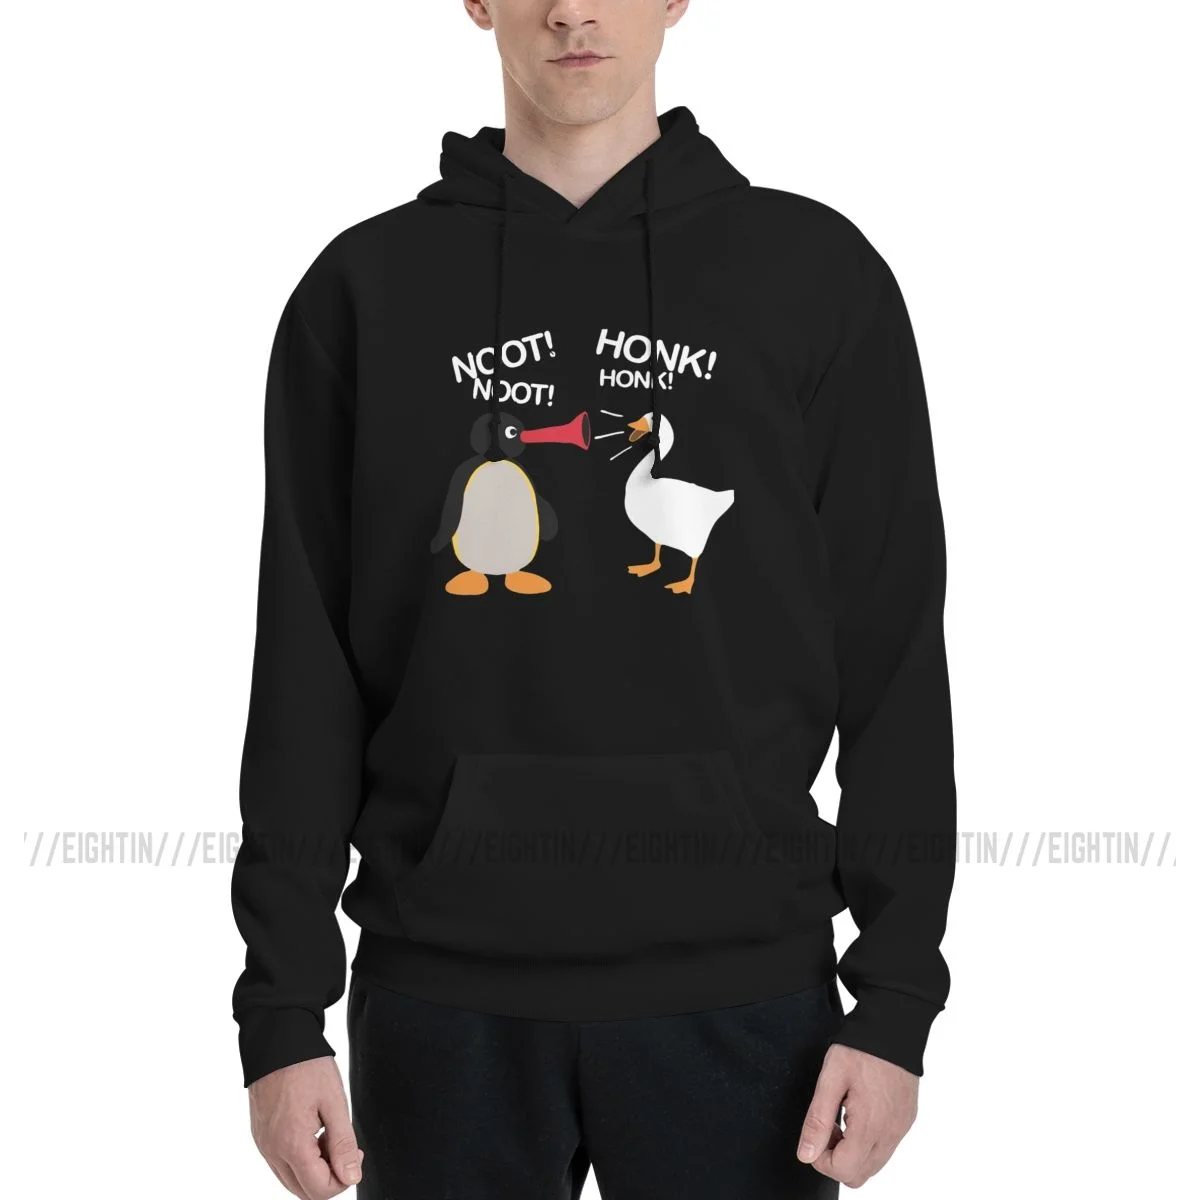 

Noot Noot Honk Honk Pingu VS Untitled Goose Hoodies Man Casual Couple Sweatshirt Pullovers Pure Cotton Design Sweatshirt